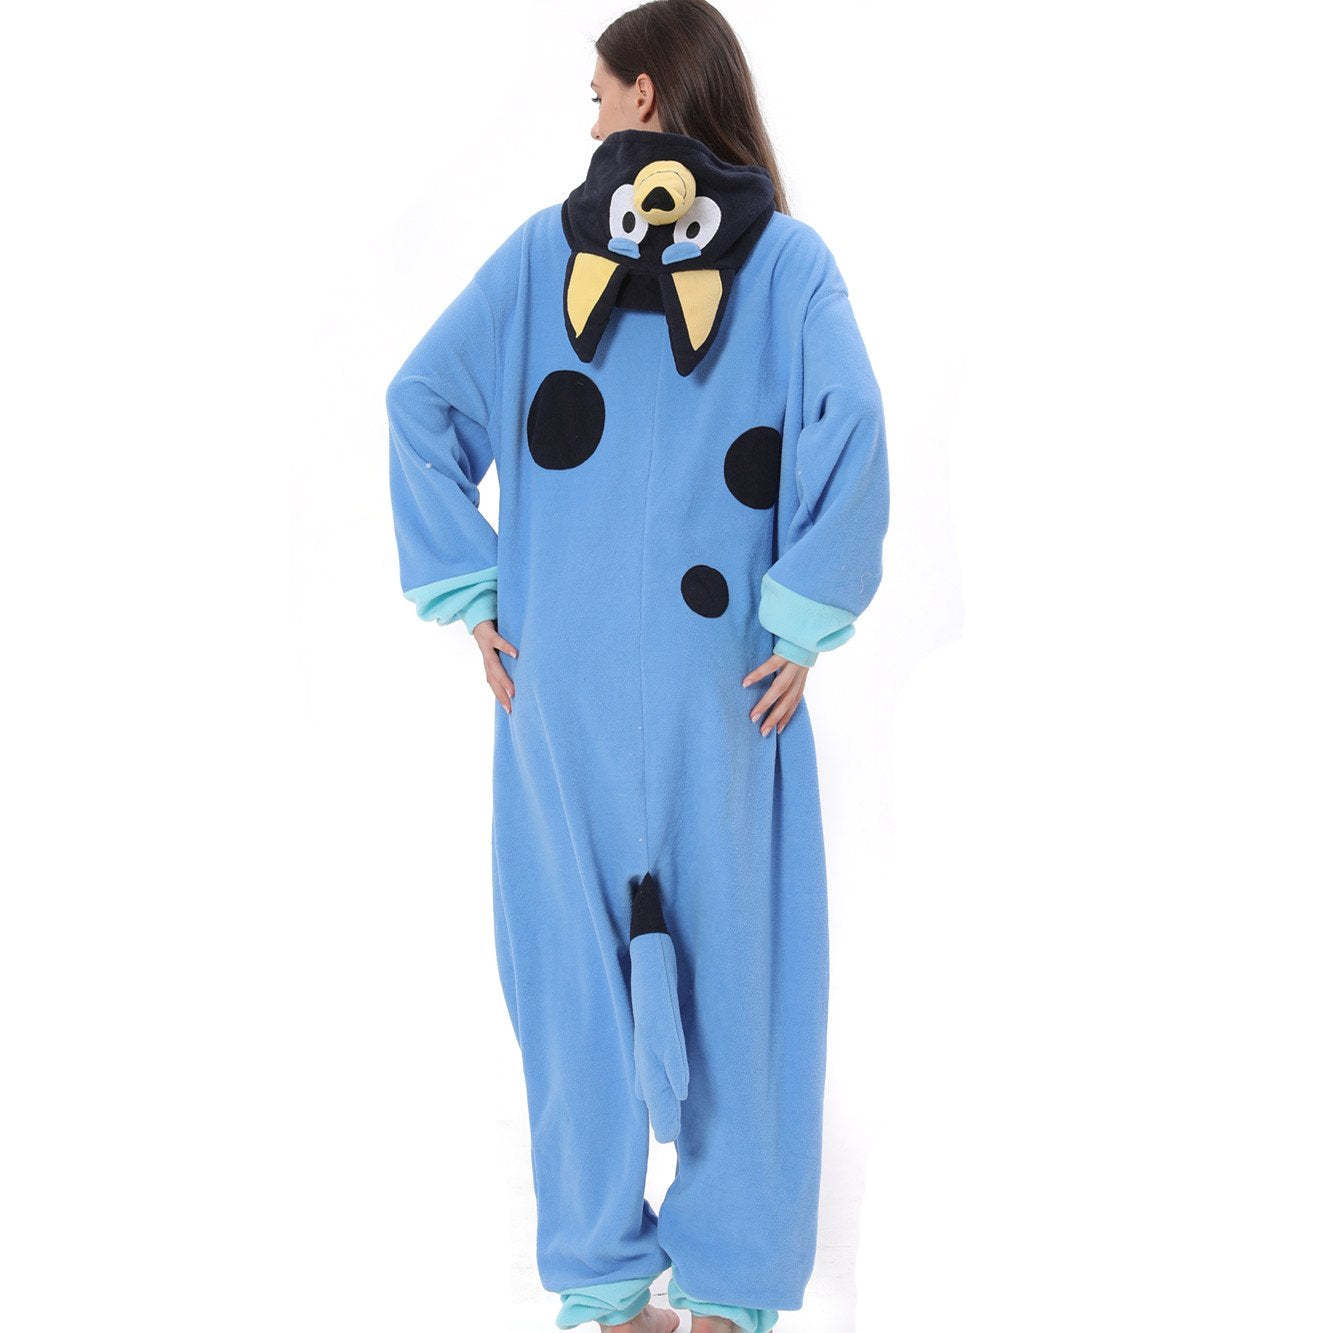 Bluey onesies Costume kigurumi onesies PJS clothes for girls Adult Outfit-Pajamasbuy